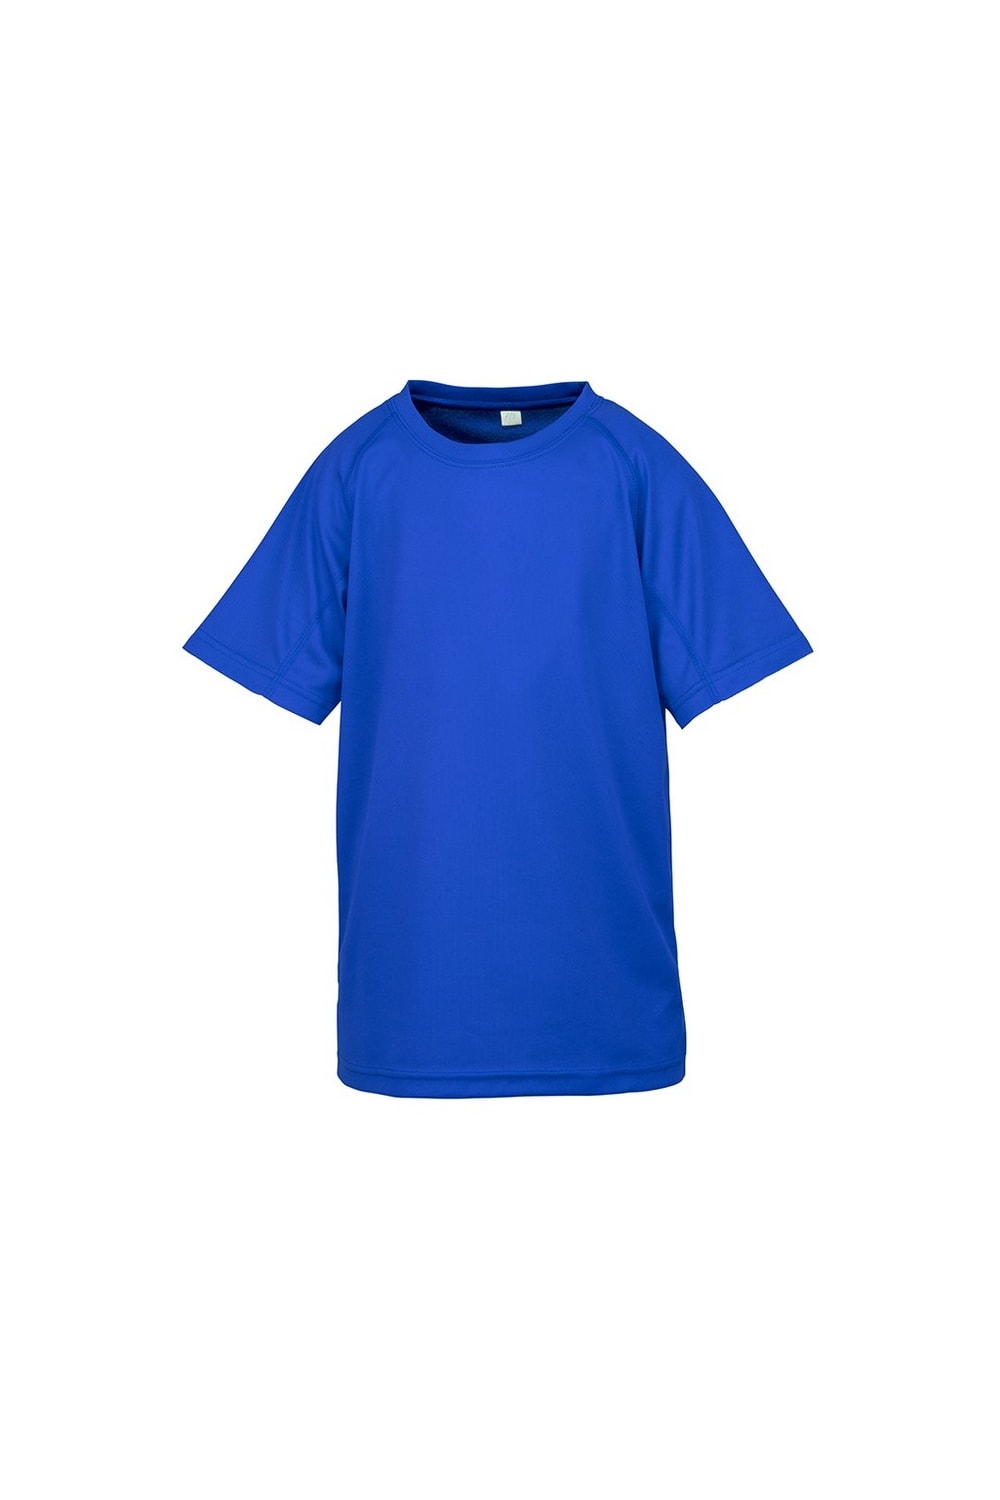 Spiro Chidlrens/Kids Impact Performance Aircool T-Shirt (Royal)